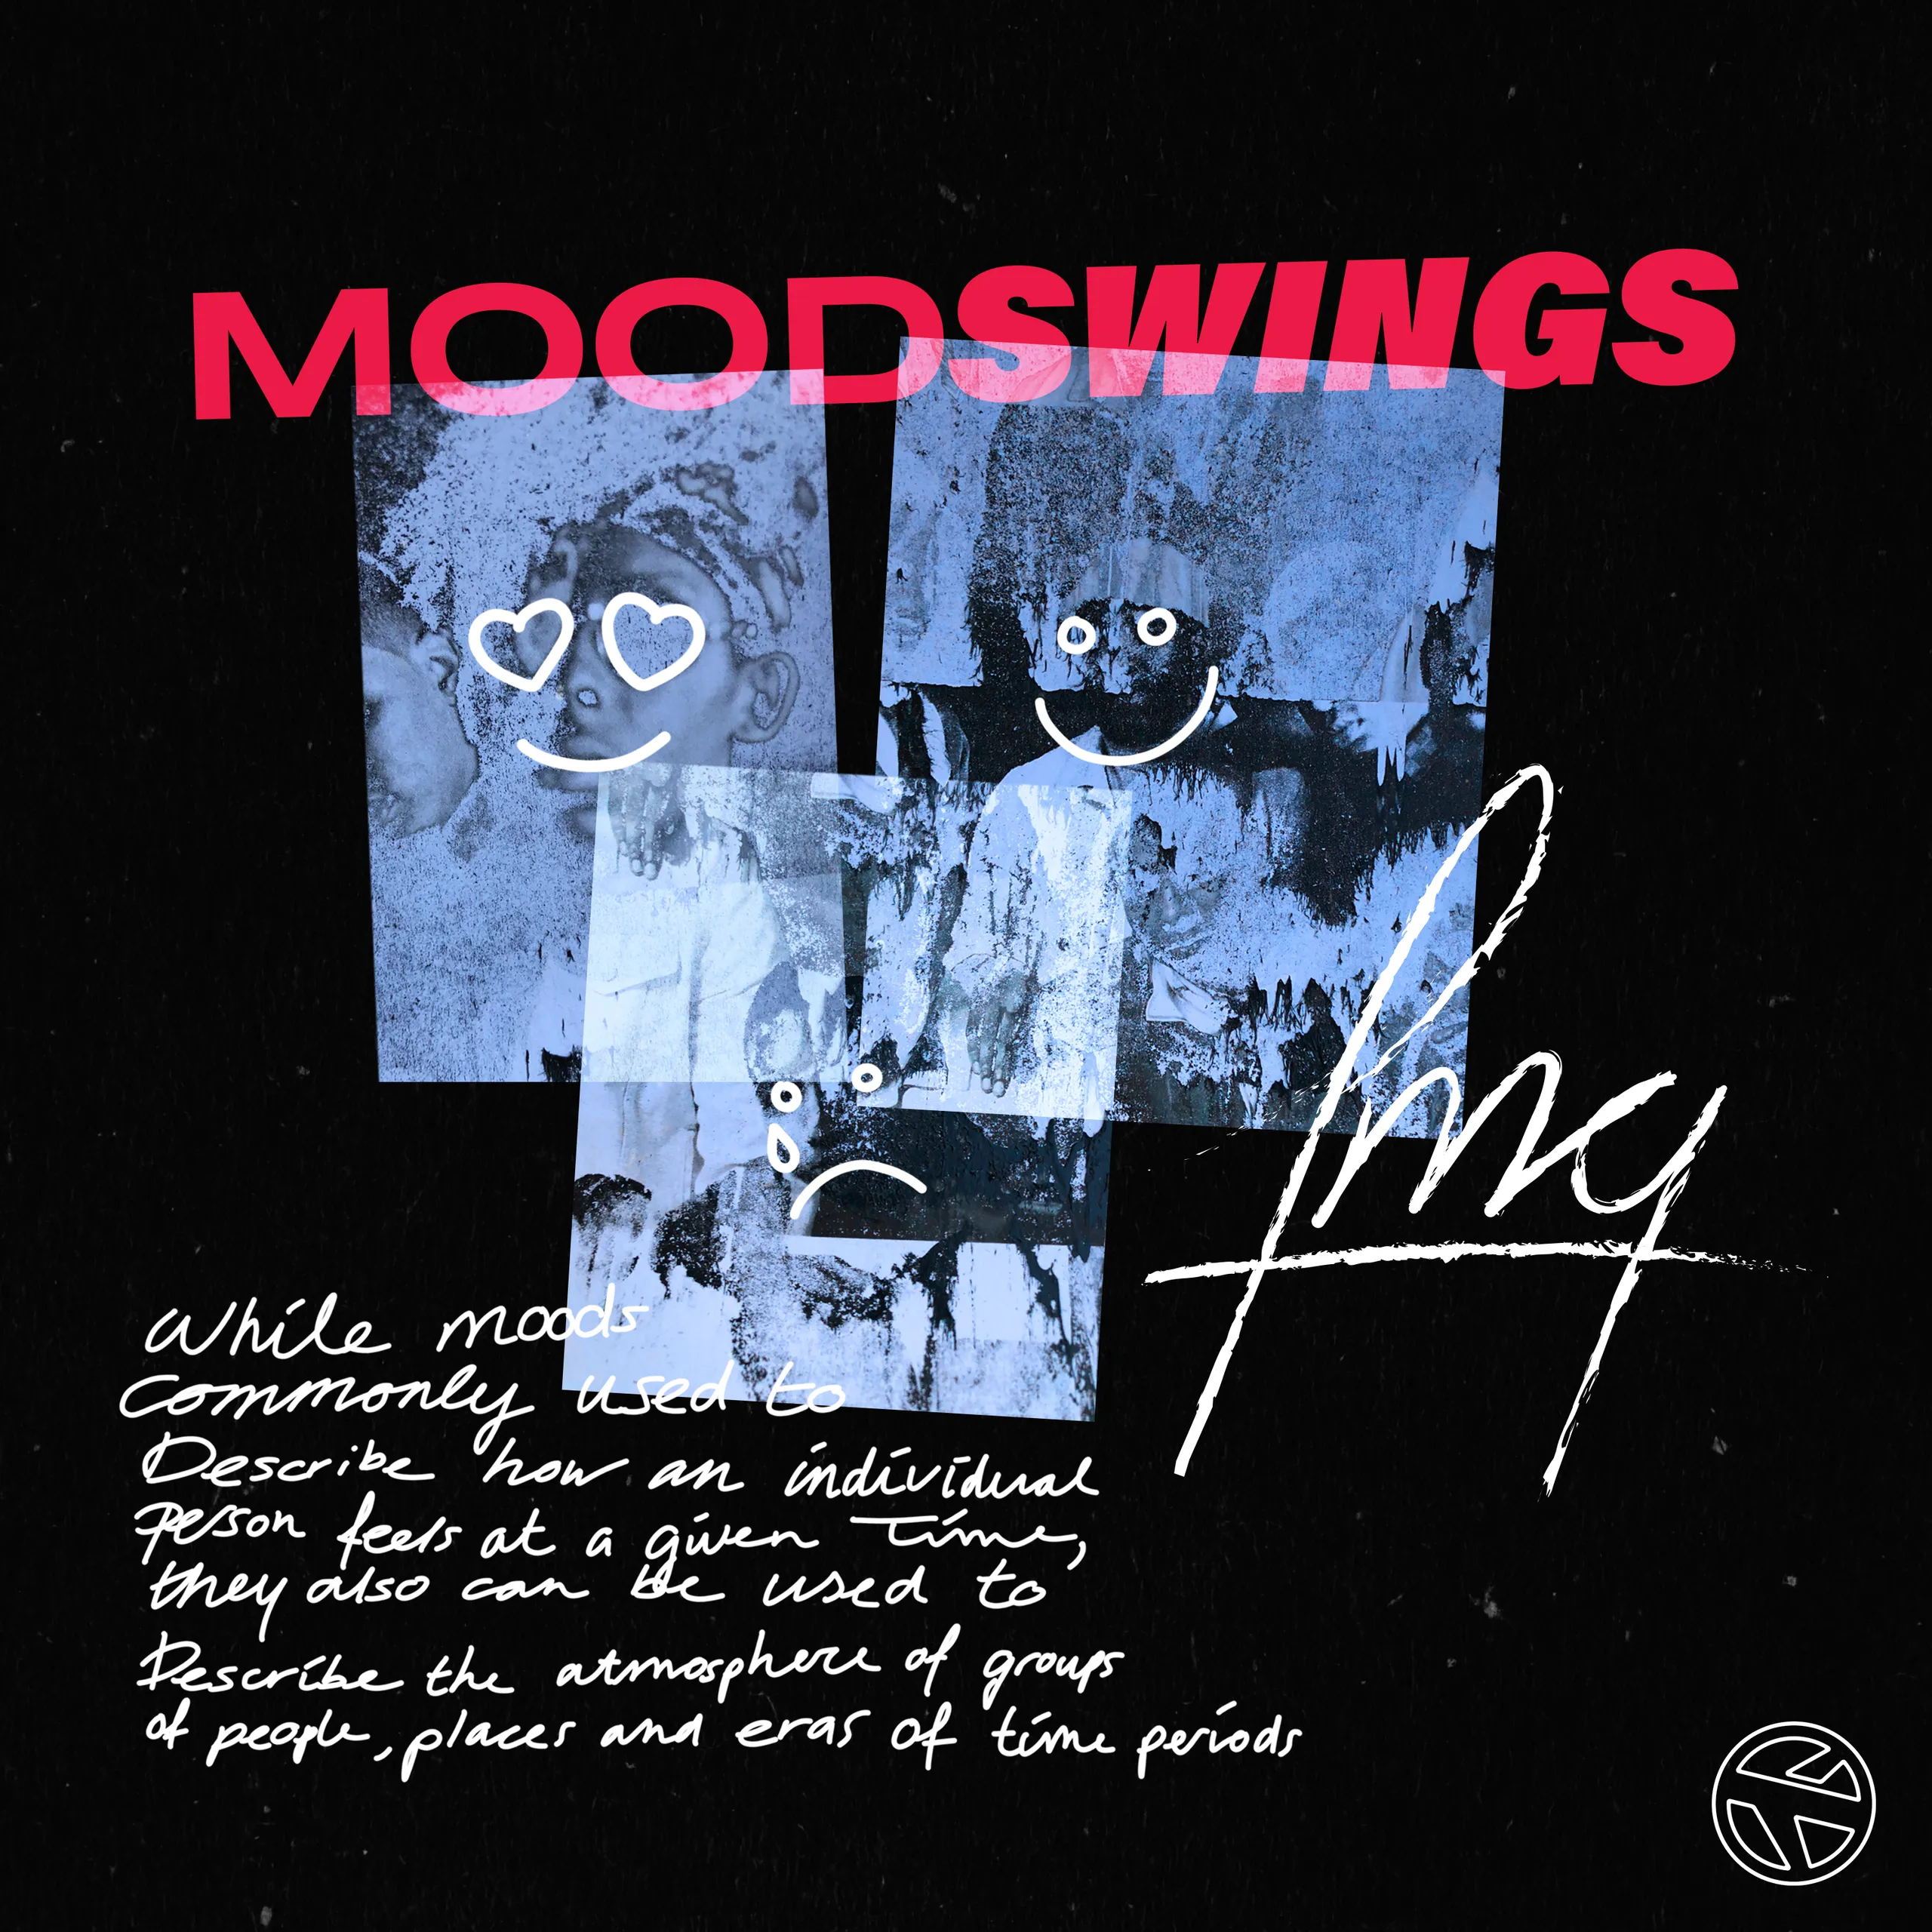 fmg moodswingers cover final